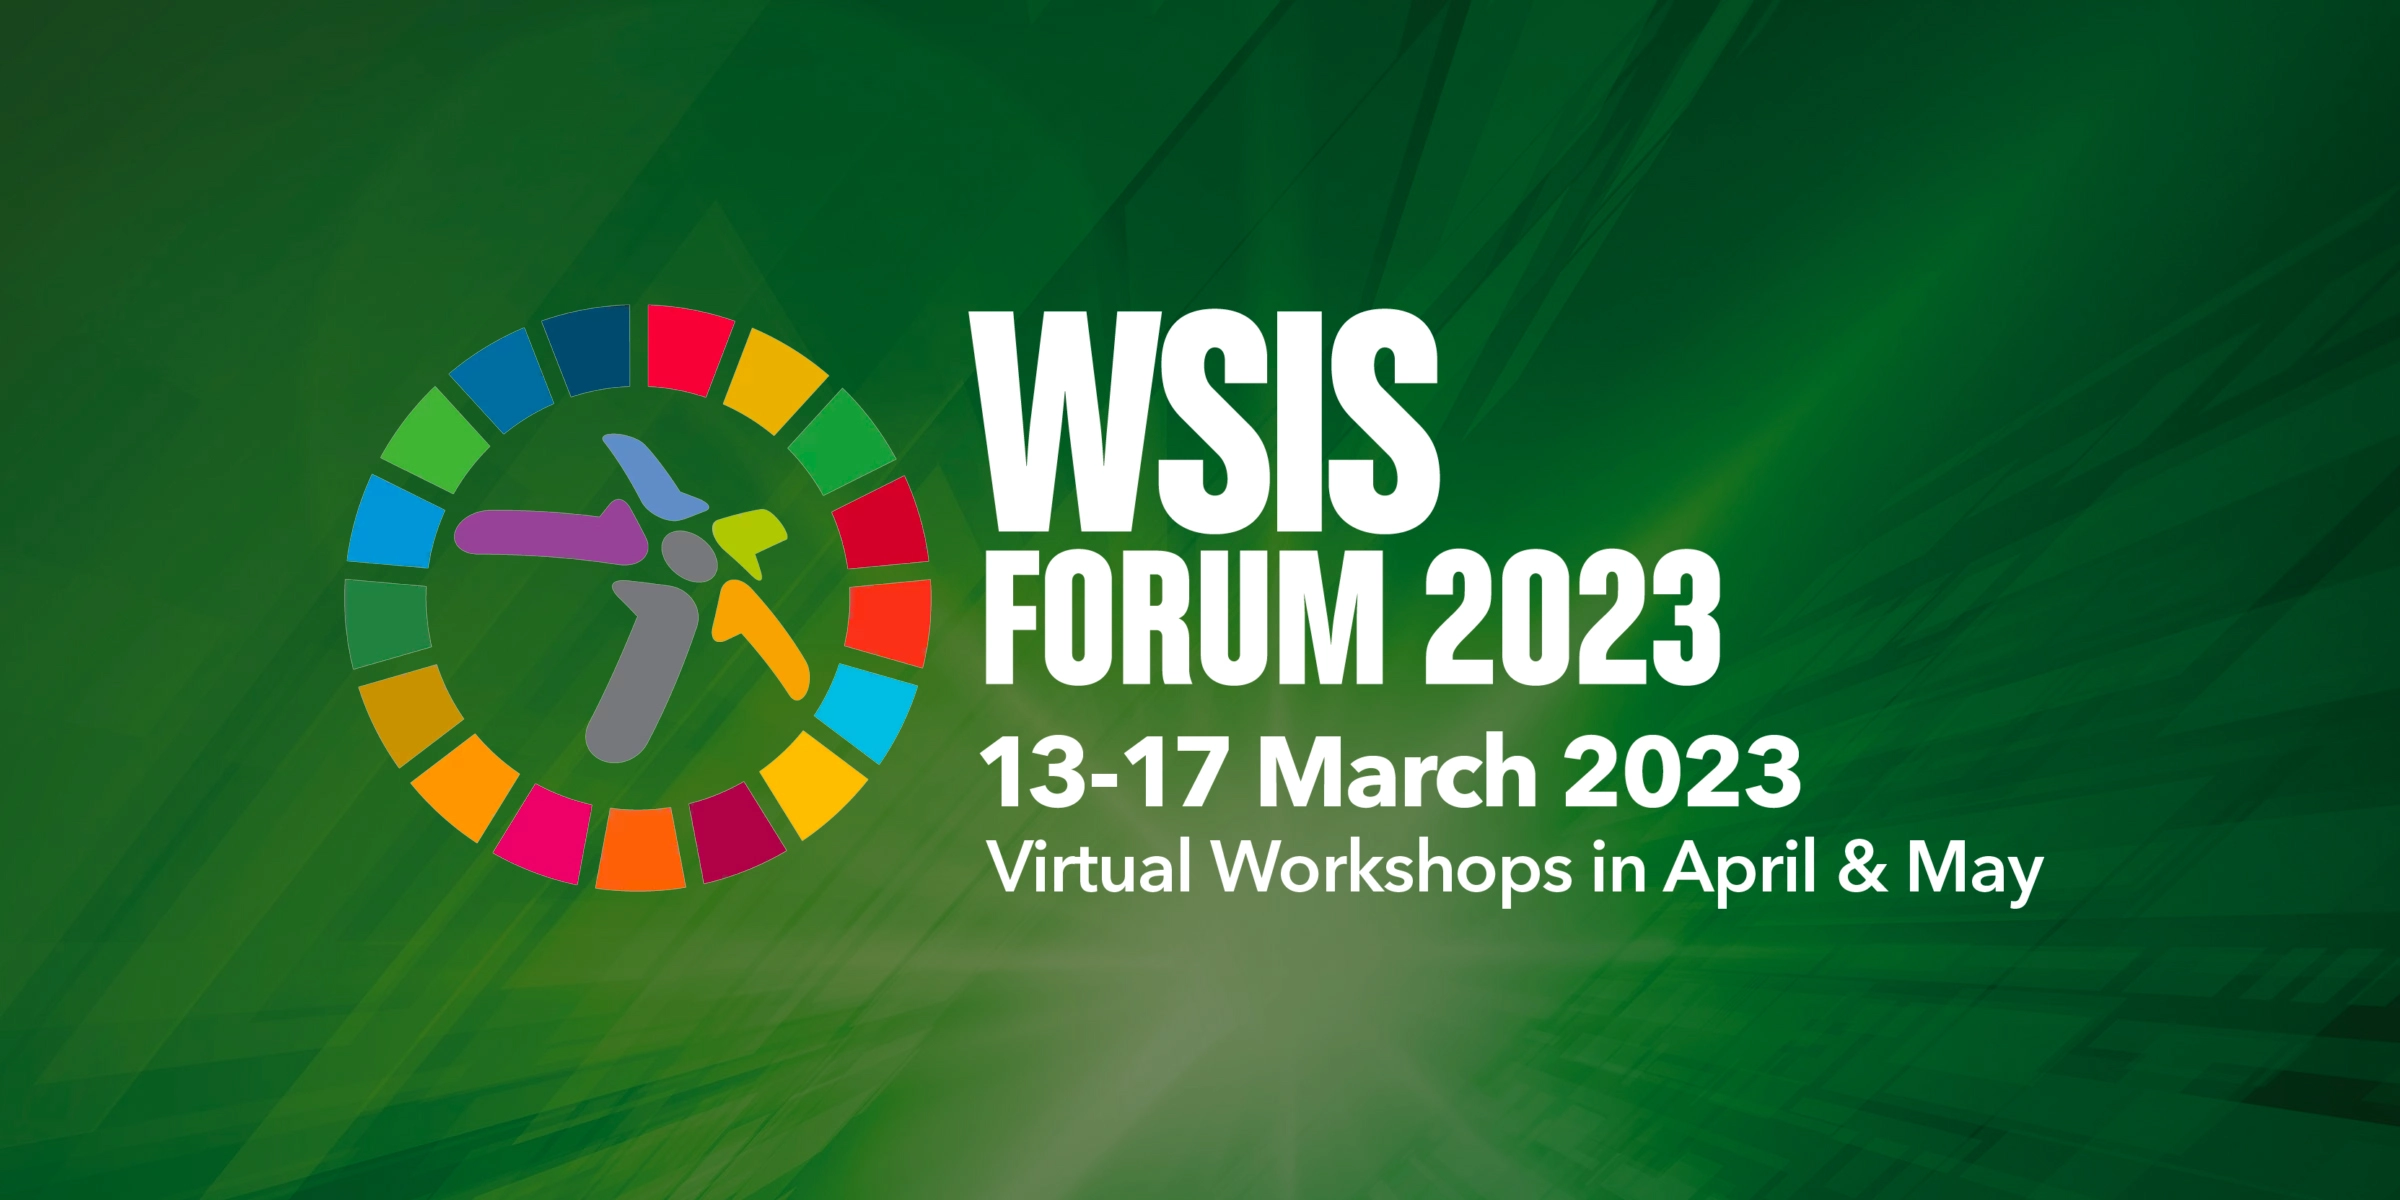 Image for event WSIS Forum 2023  GovStack CIO Digital Leaders Forum